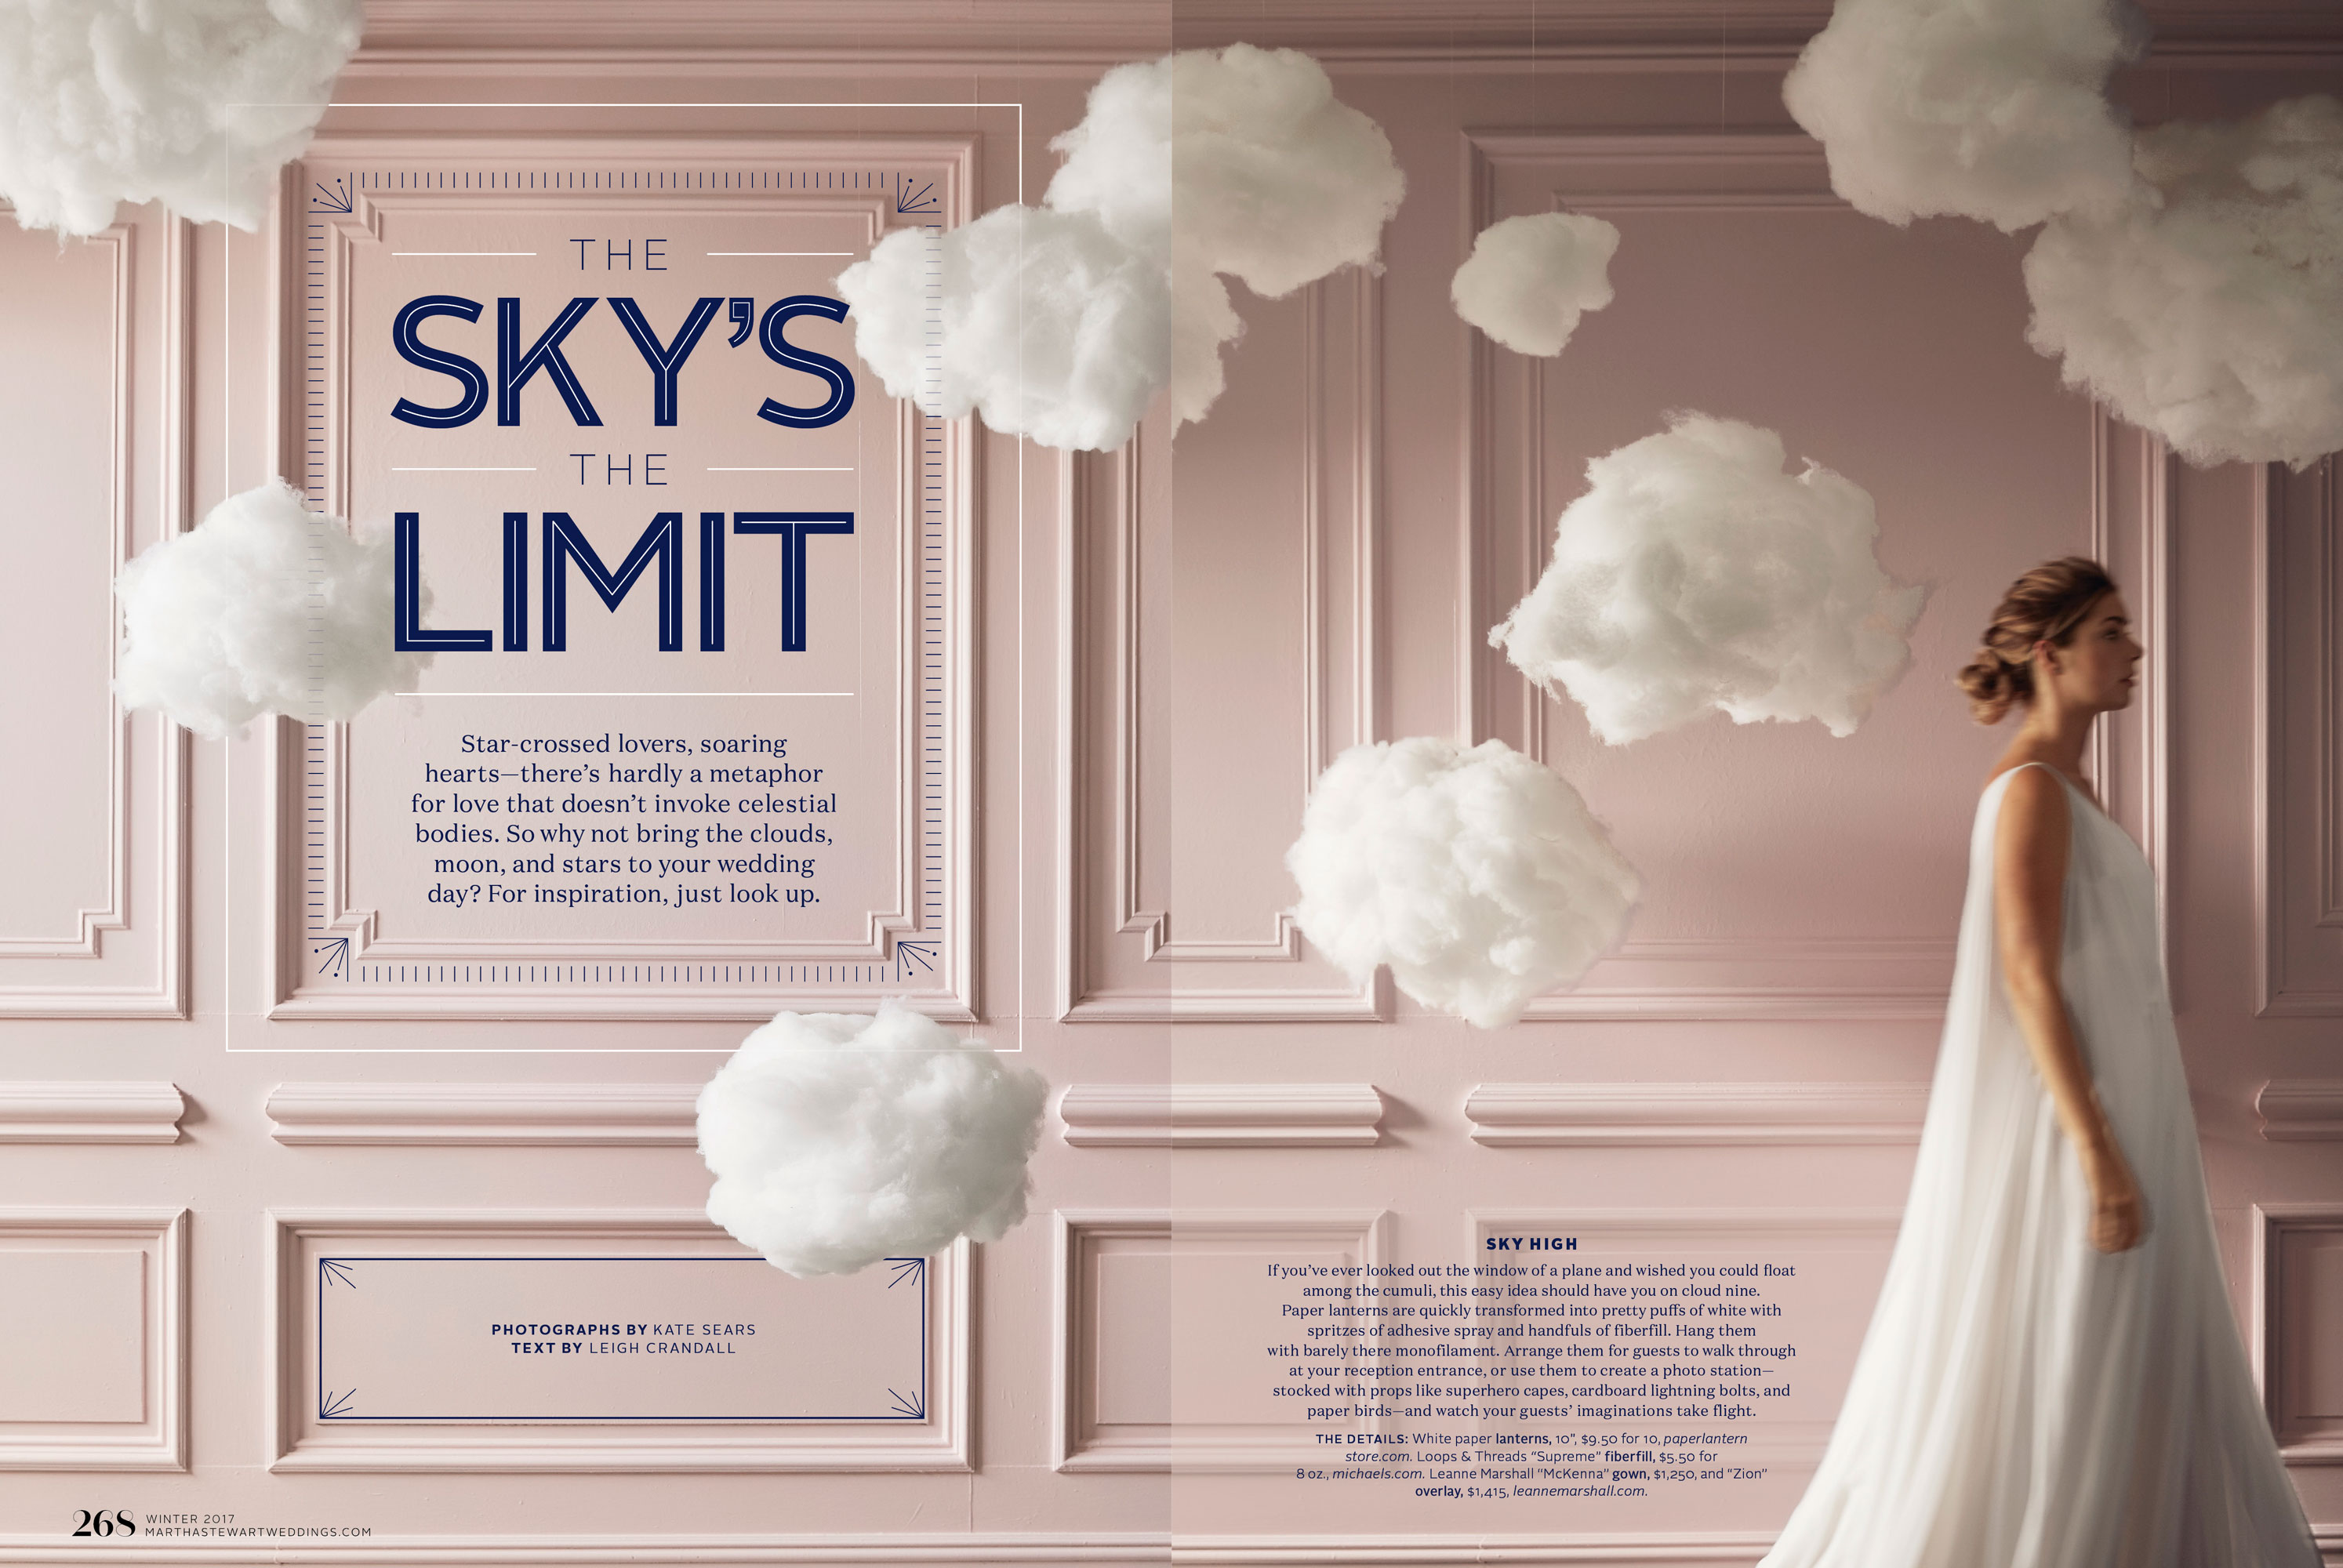 The Sky's the Limit by Megan Hillman